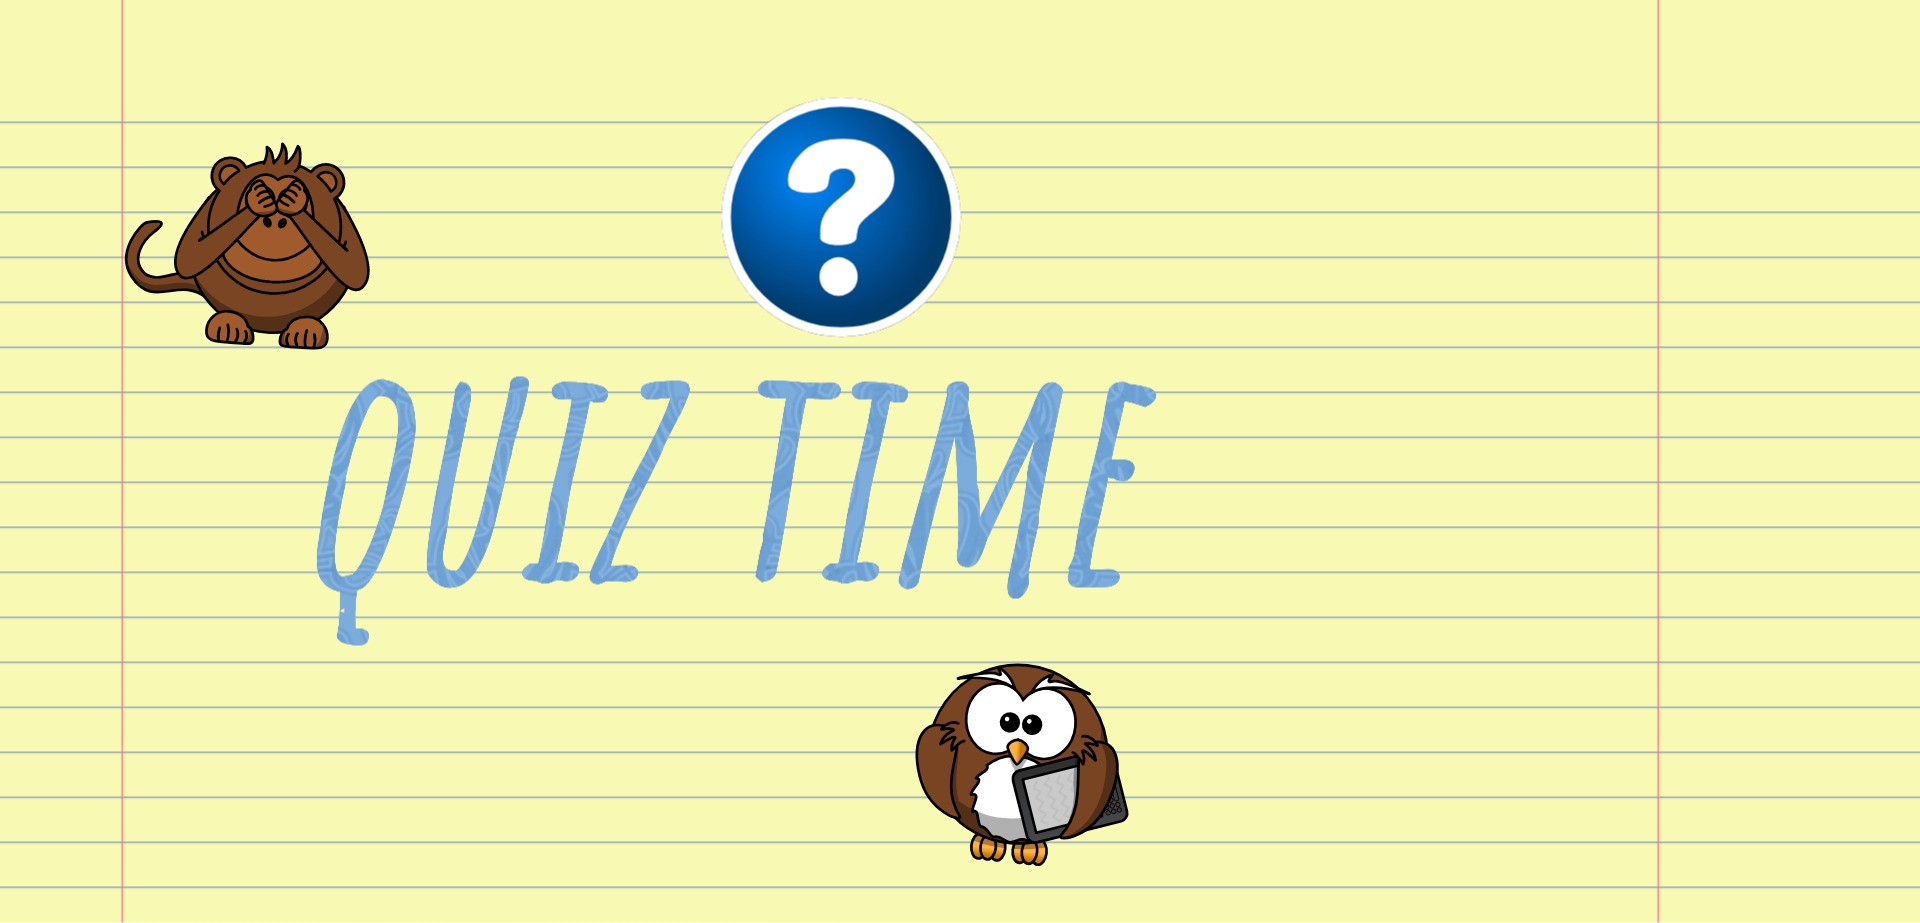 #quiz time